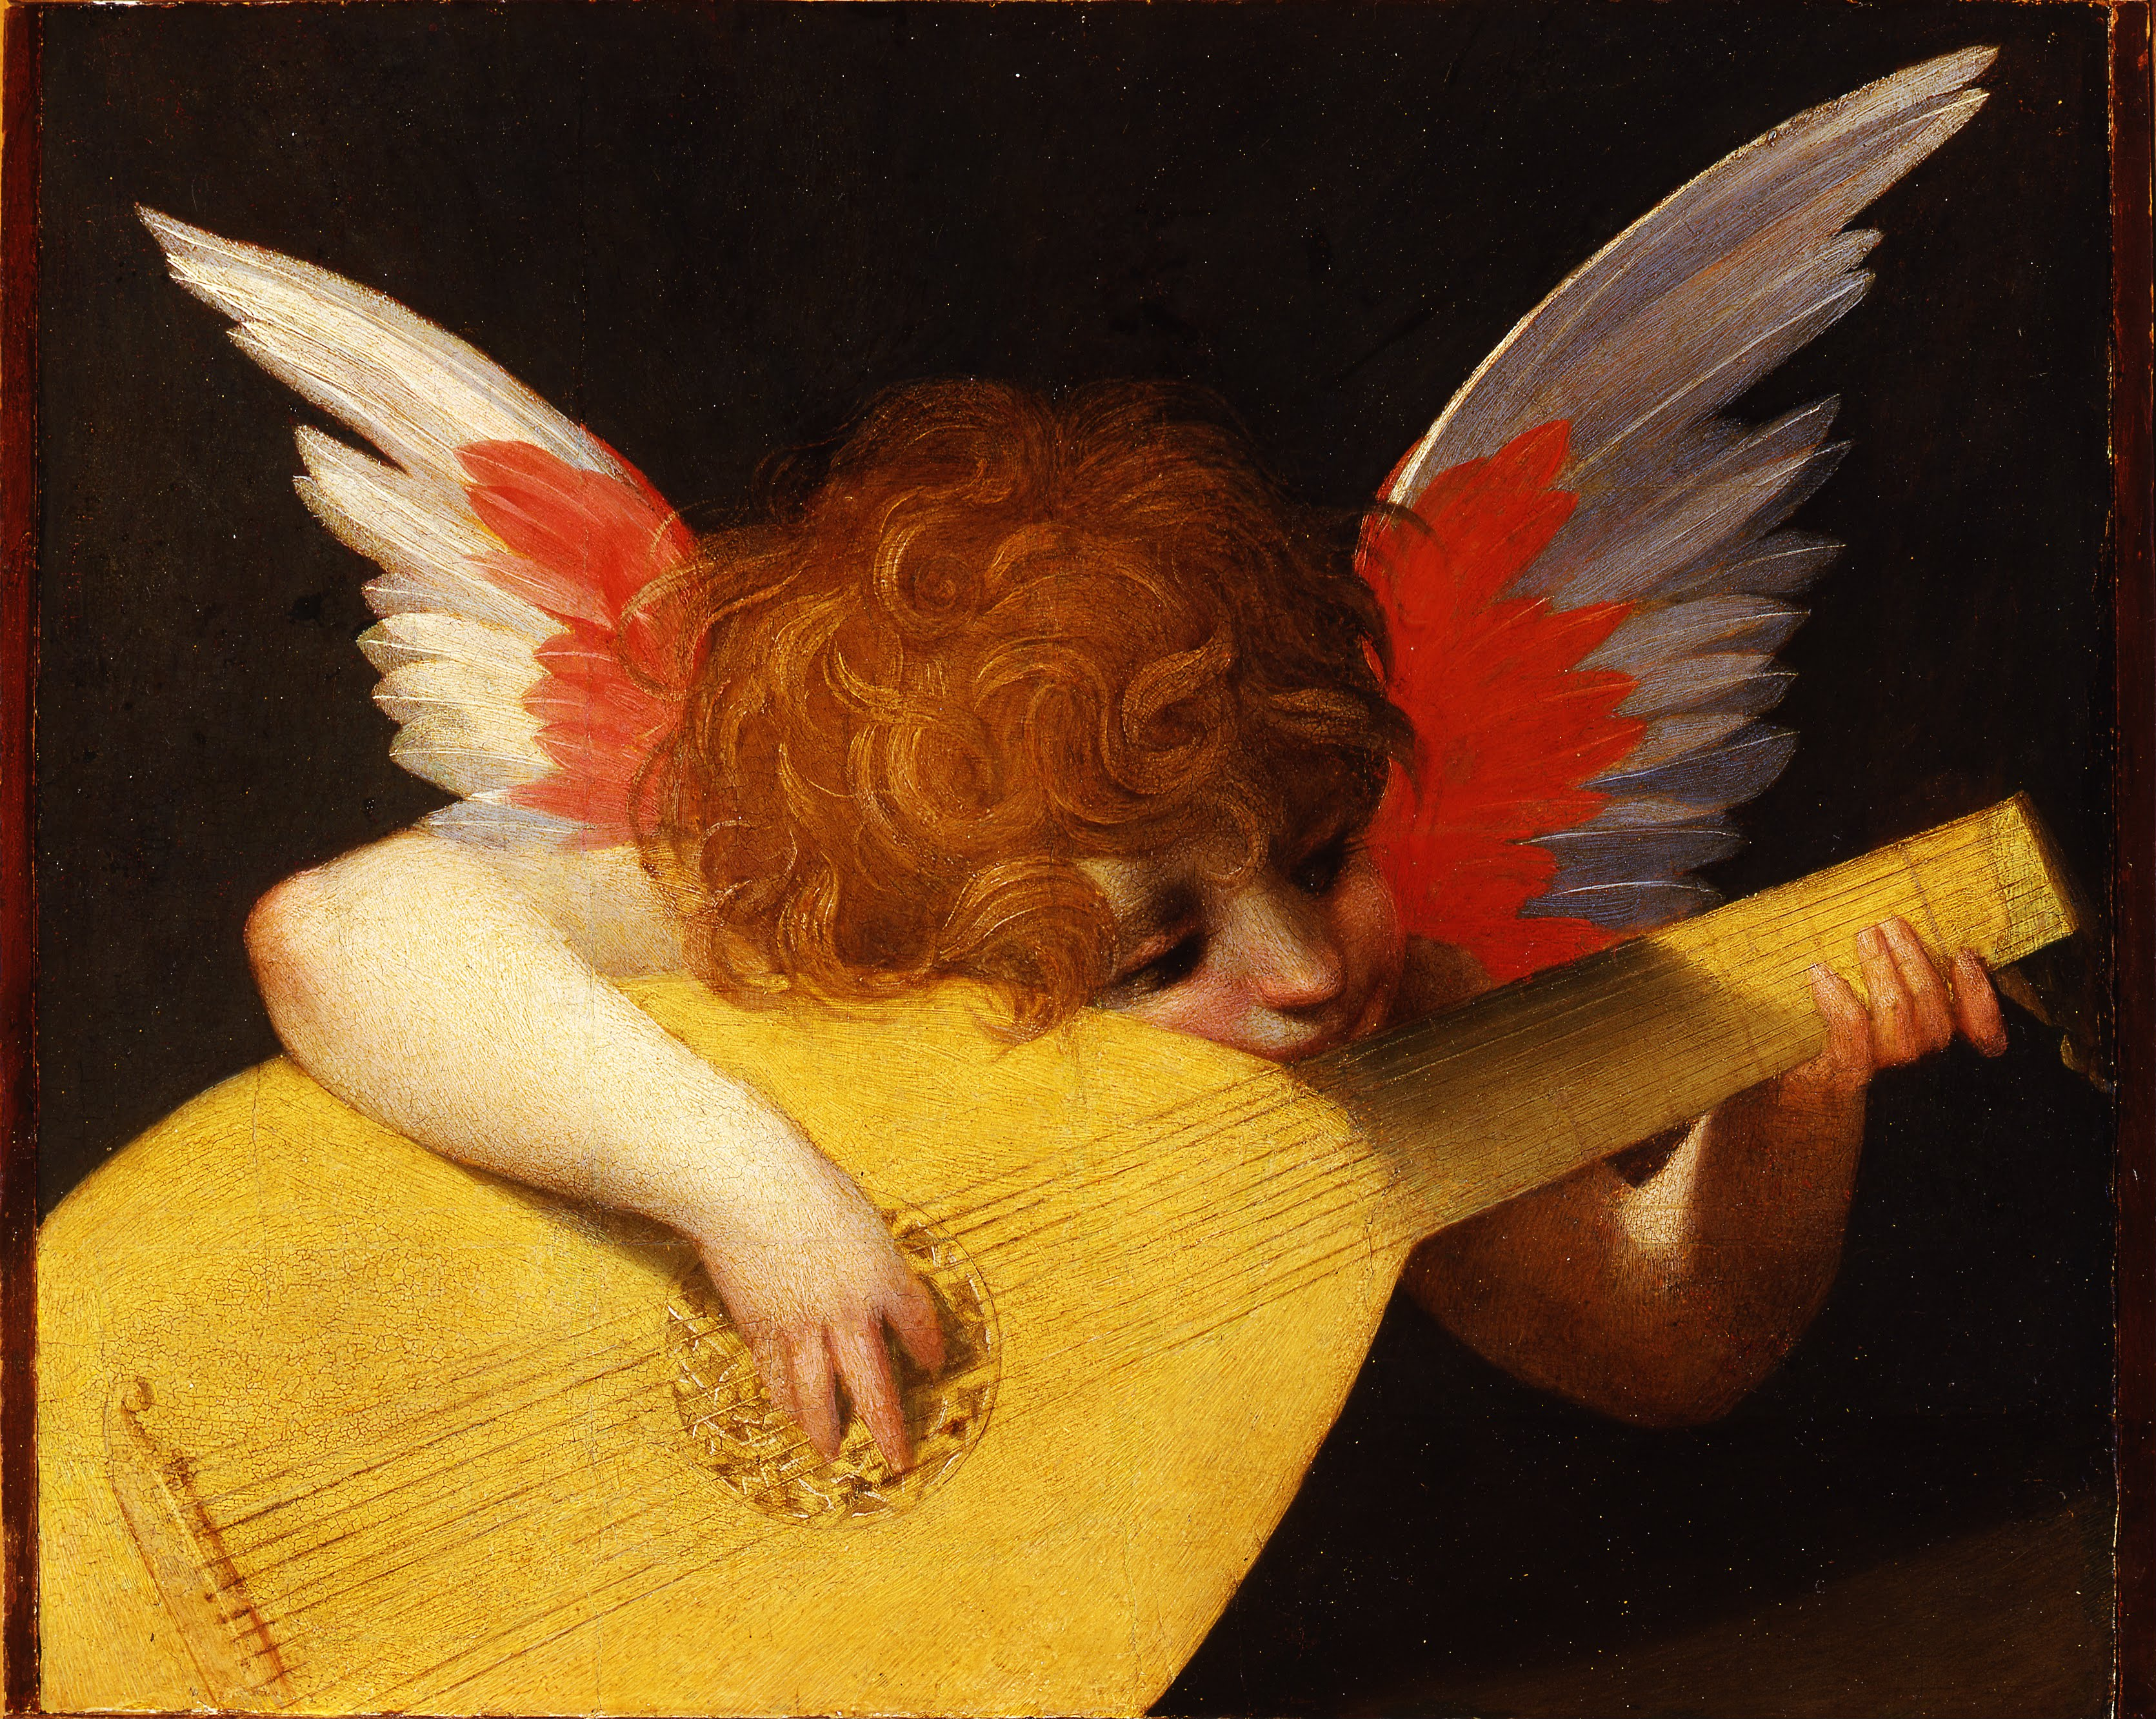 Luitspelende engel by Rosso Fiorentino - 1521 - 39,5 x 47 cm 